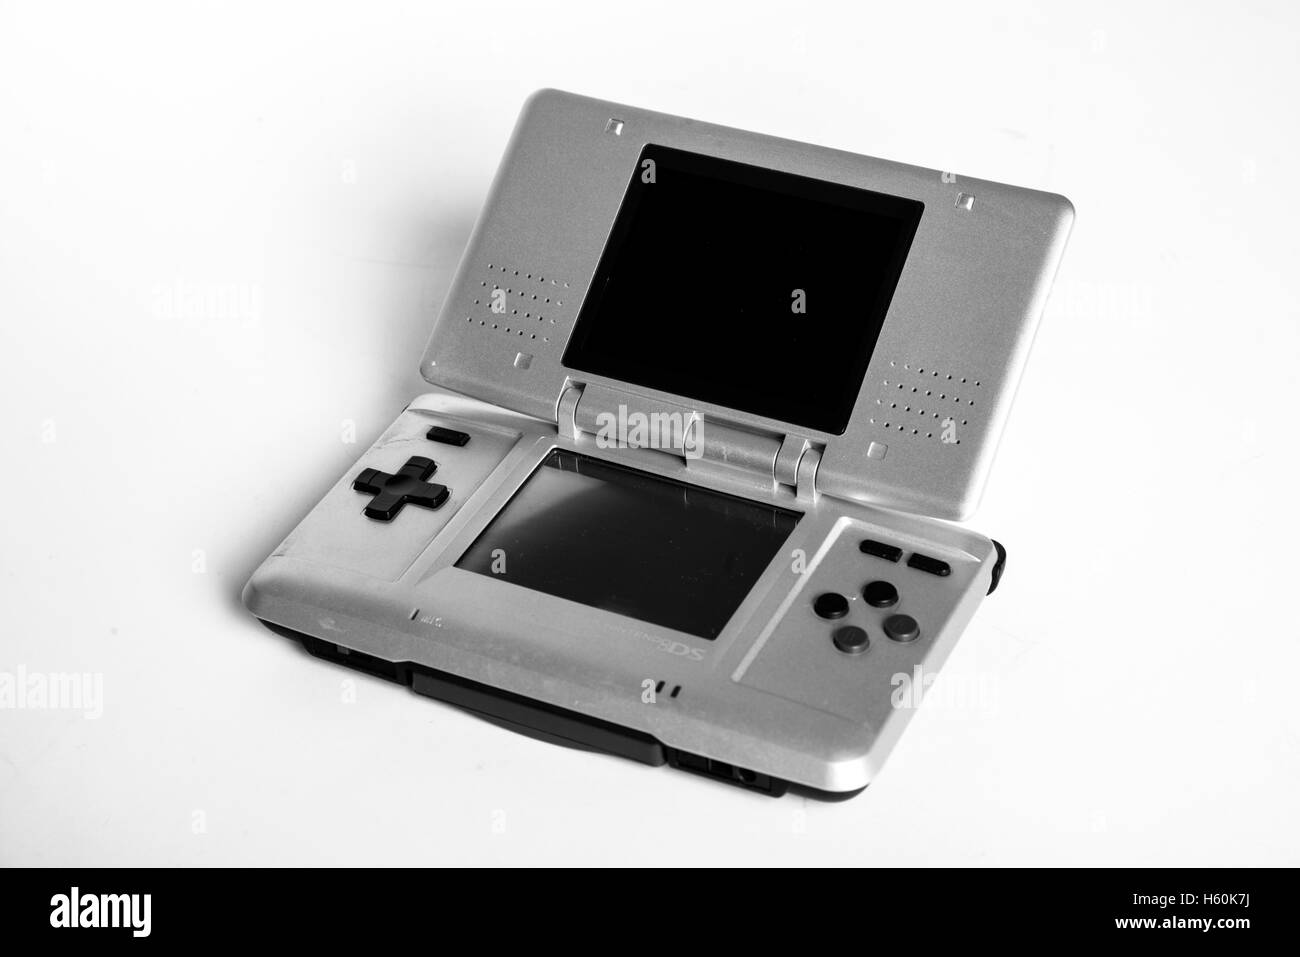 Nintendo DS CONSOLE Foto stock - Alamy